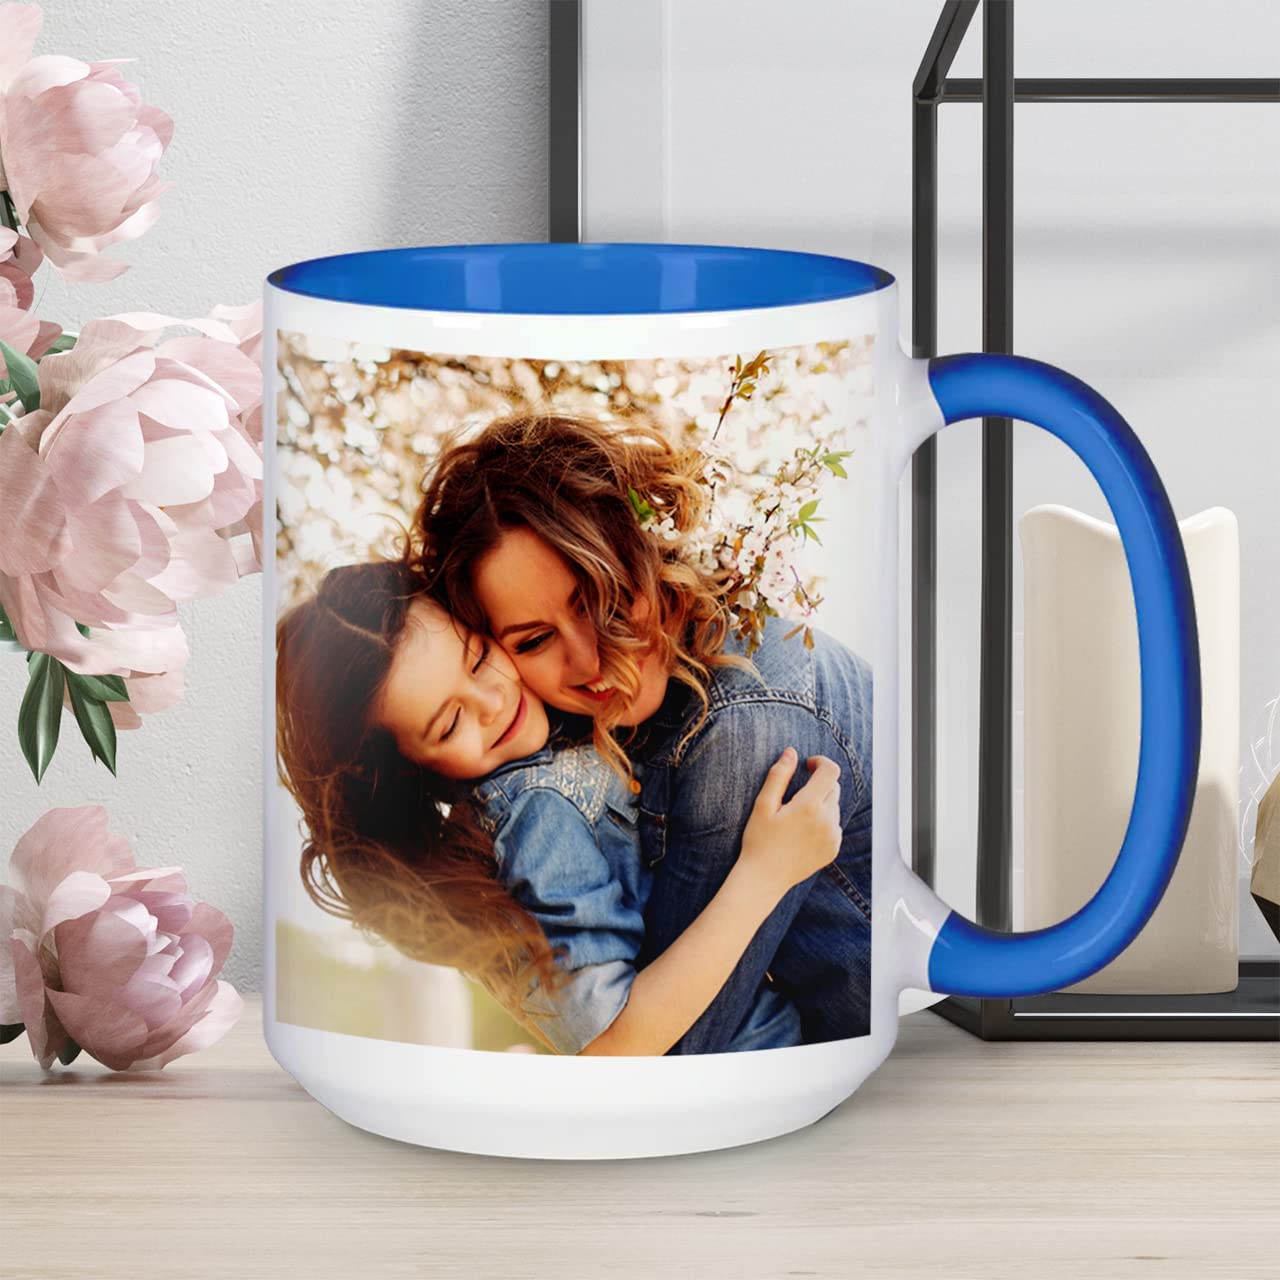 15oz-blue-inside-handle-color-custom-coffee-mug-with-photo-text-logo